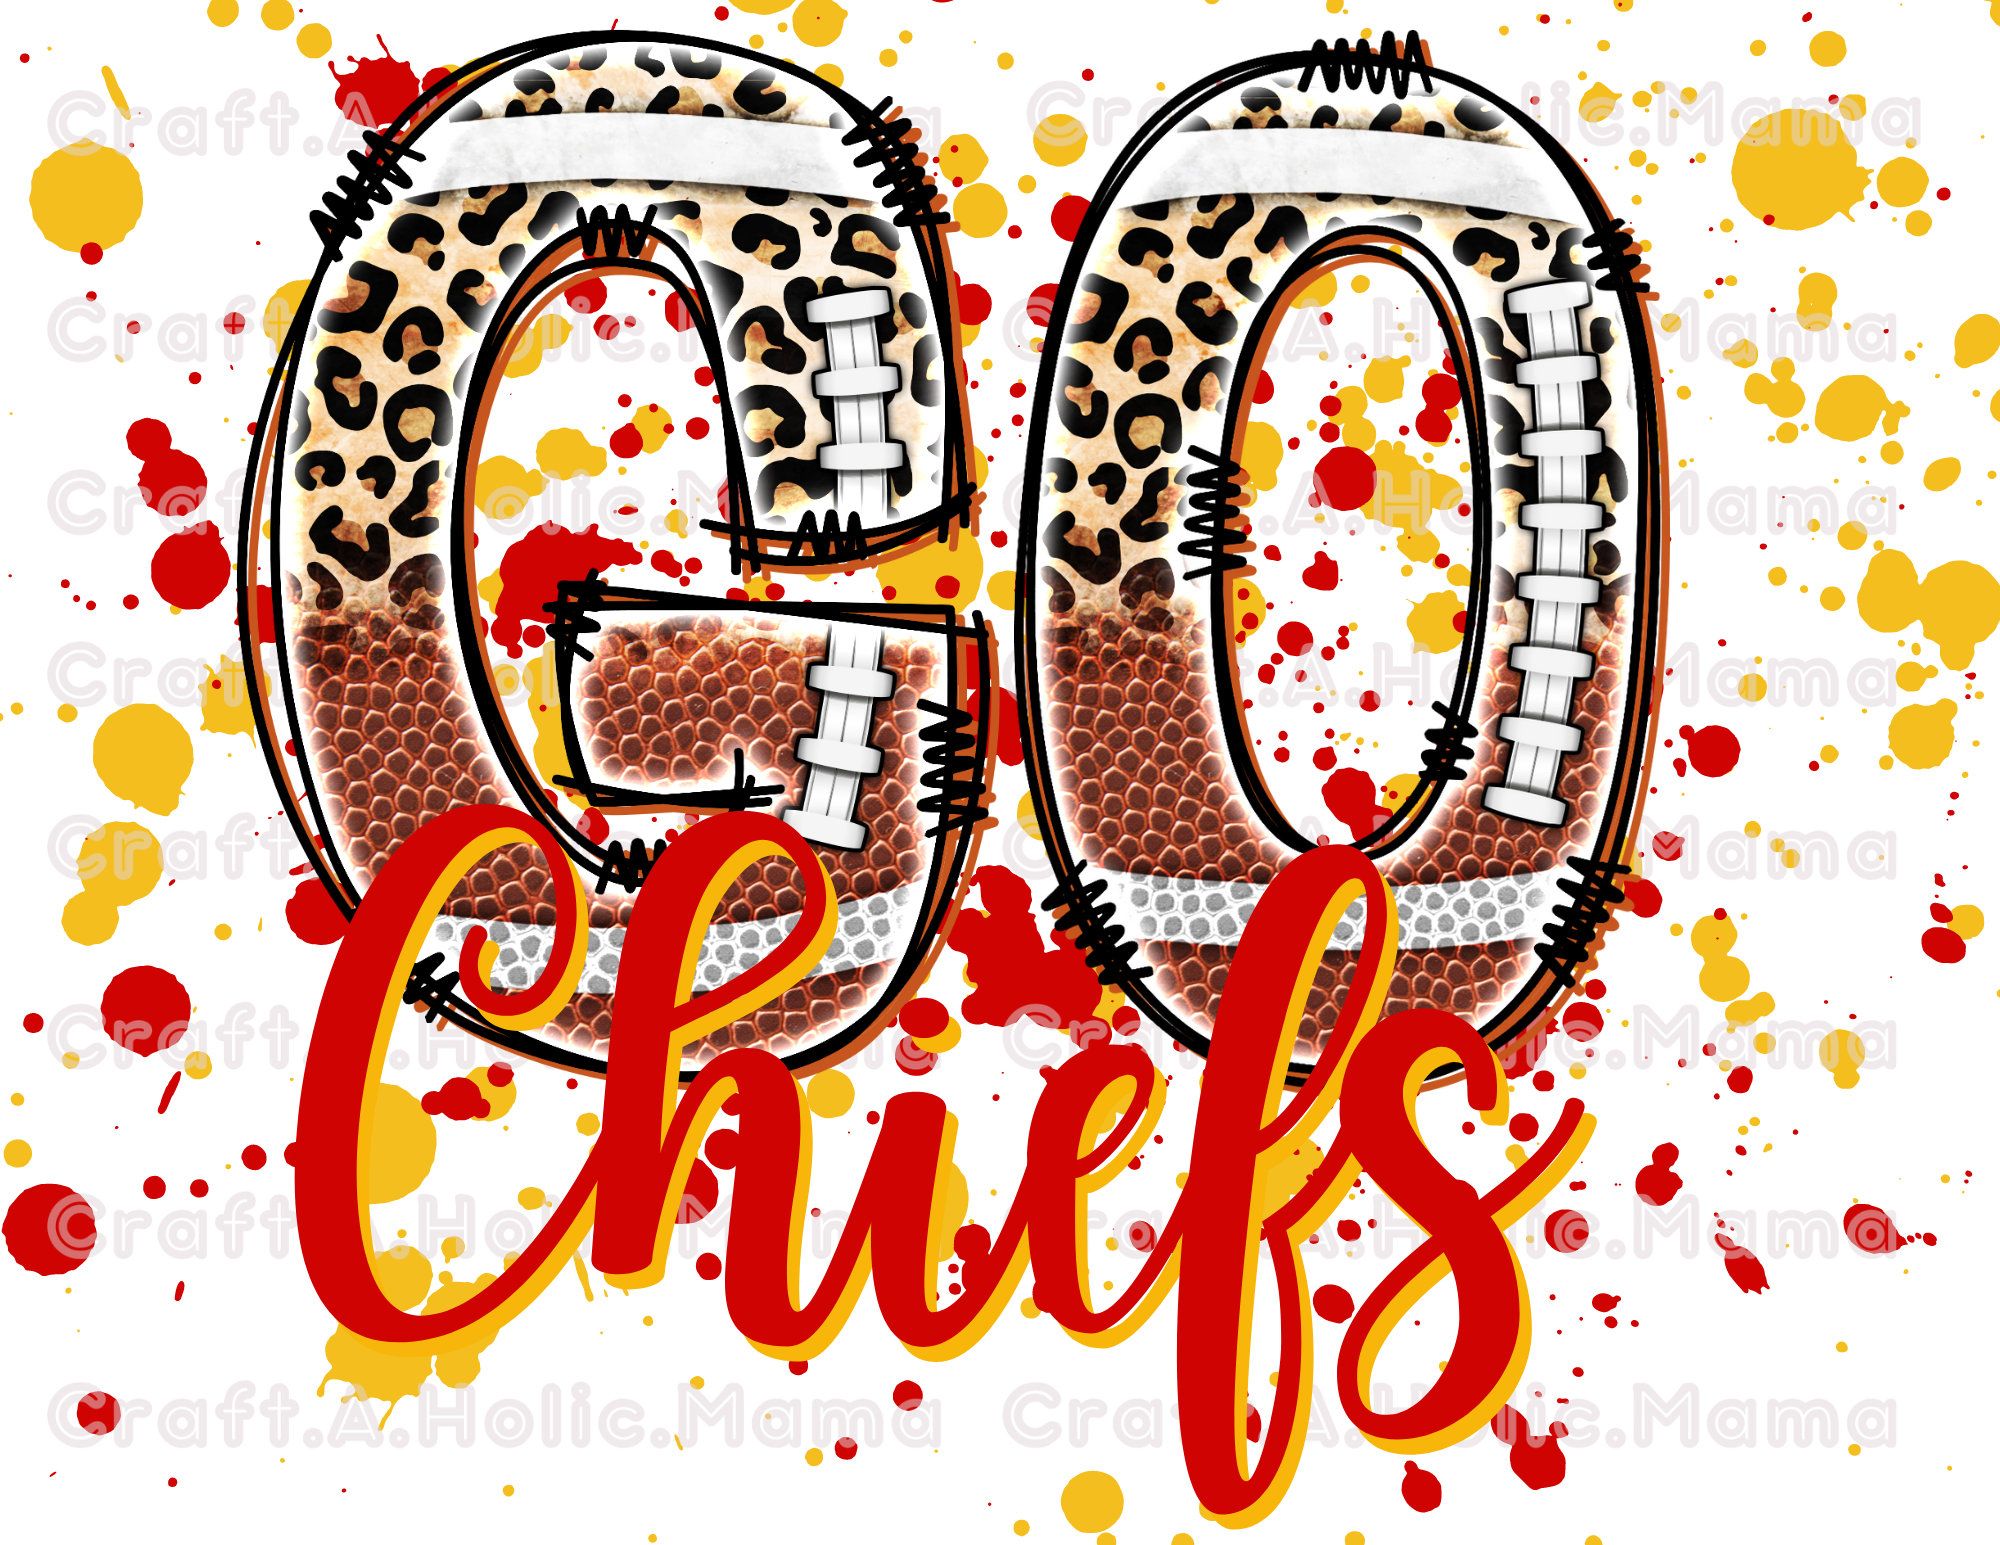 Go Chiefs Leopard Print PNG Digital Download